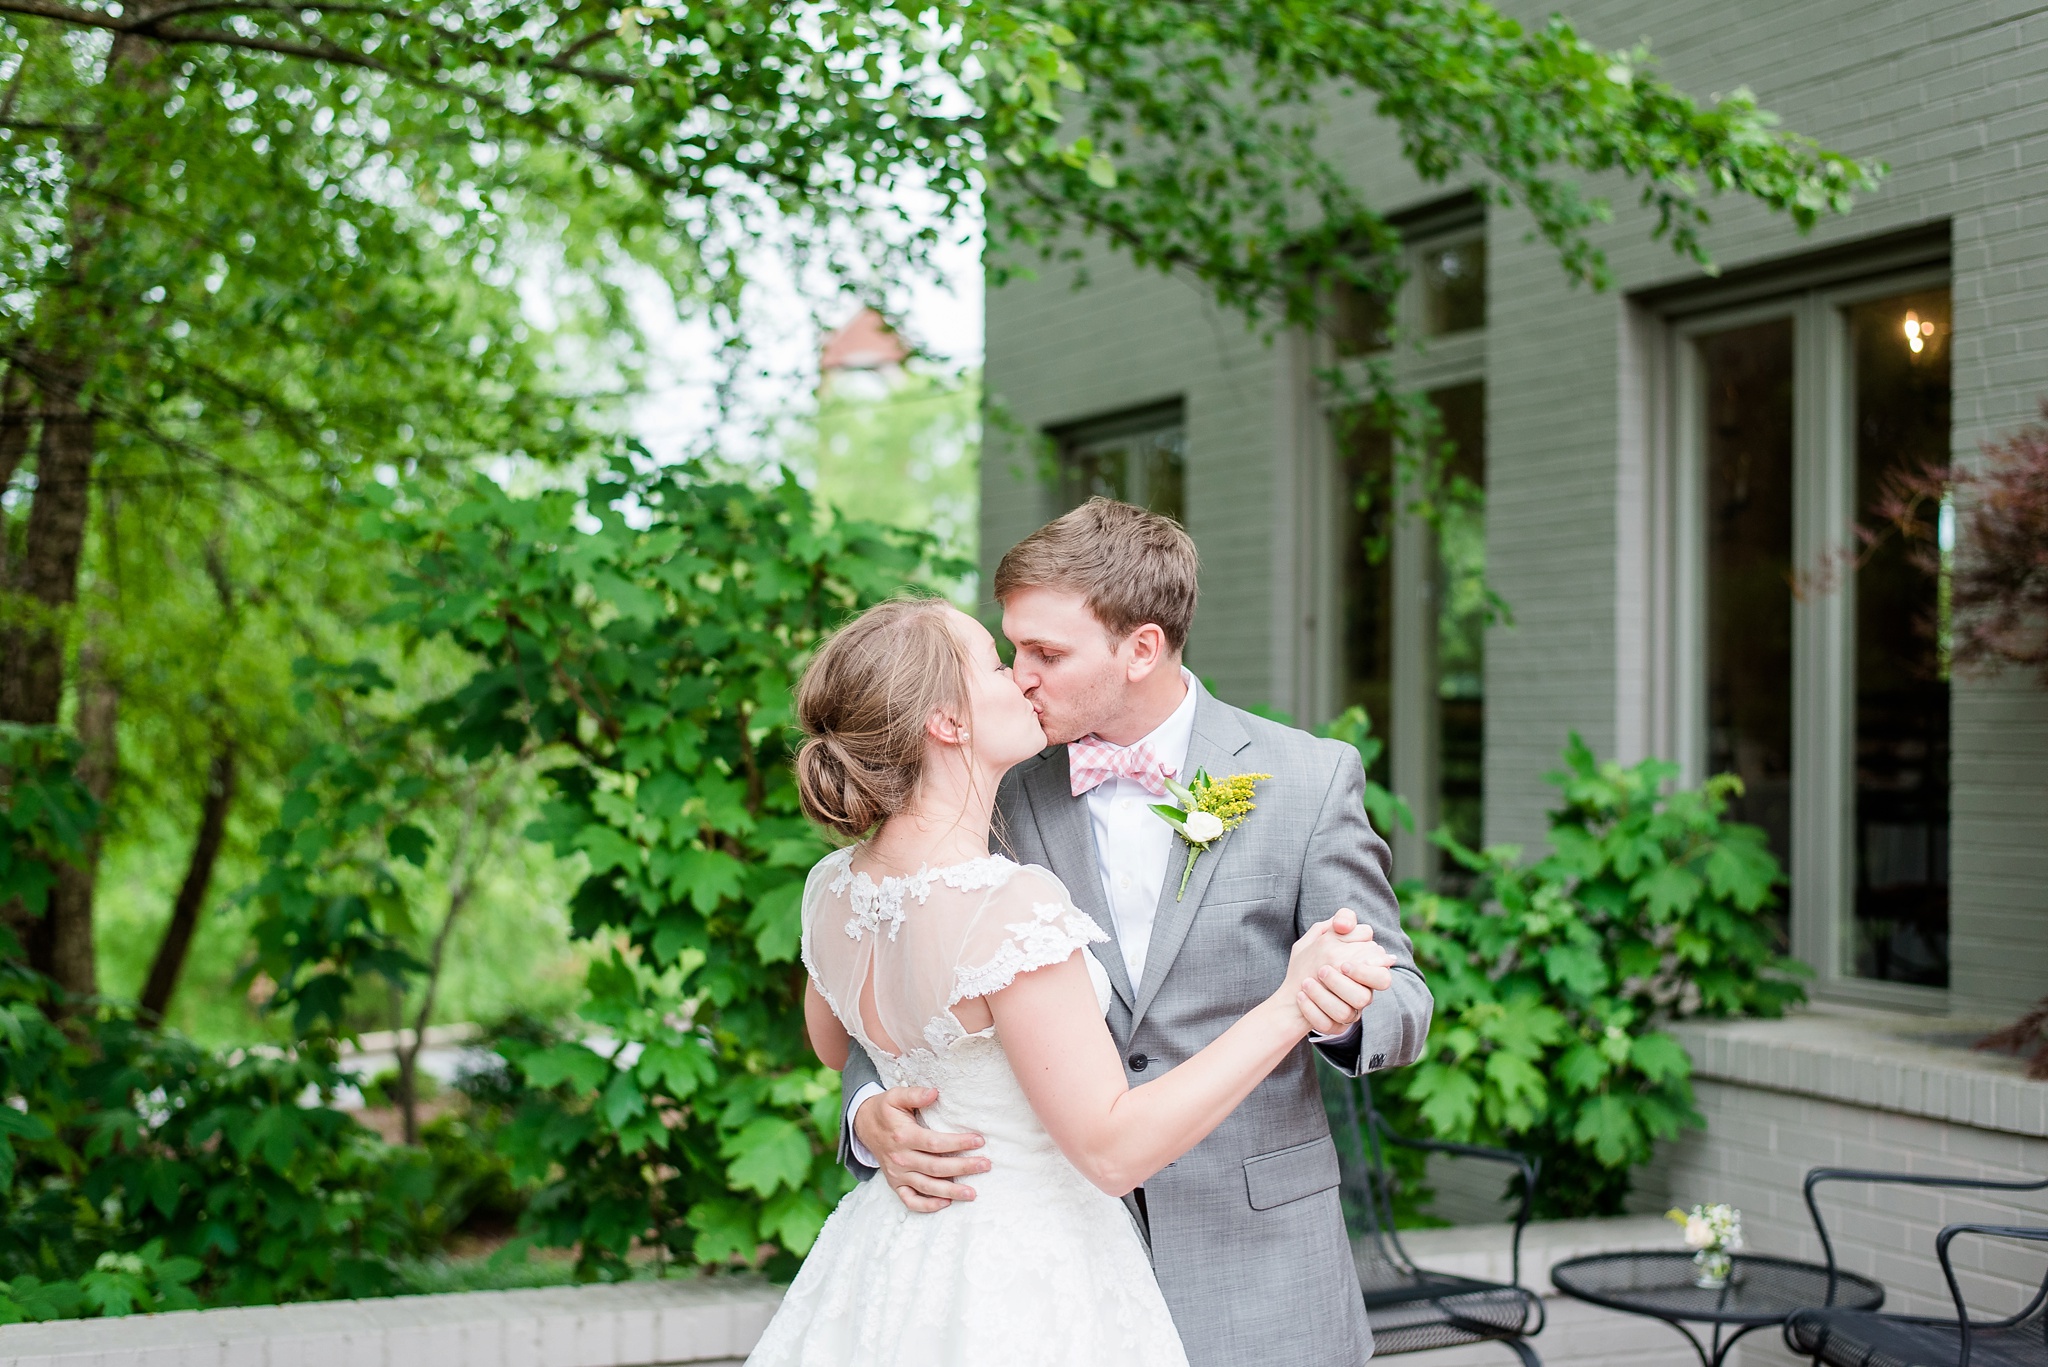 Briarwood Caroline House Blush Spring Garden Wedding | Birmingham Alabama Wedding Photographers_0056.jpg